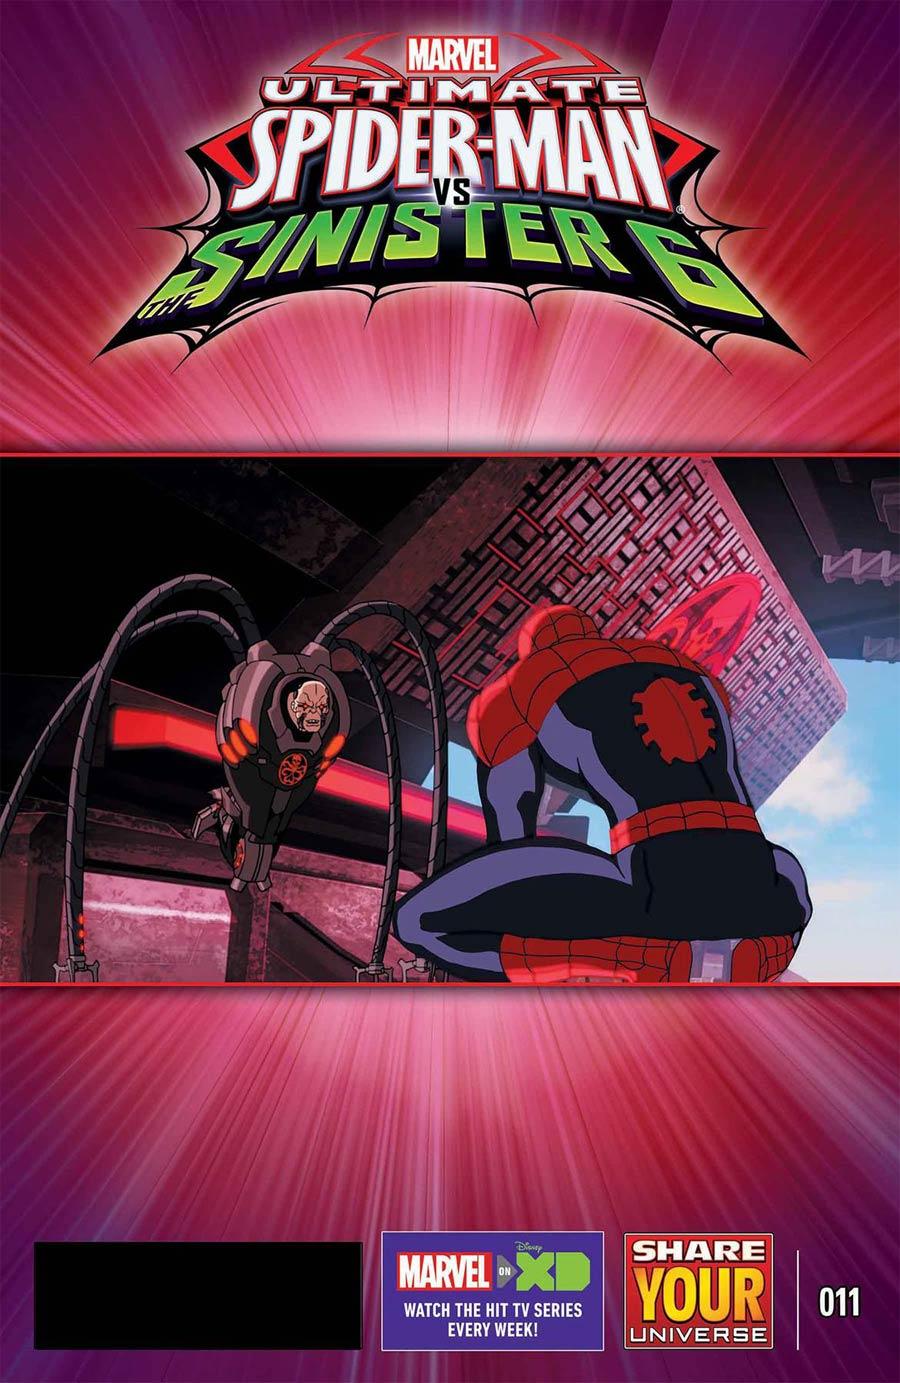 Marvel Universe Ultimate Spider-Man vs Sinister Six Vol. 1 #11